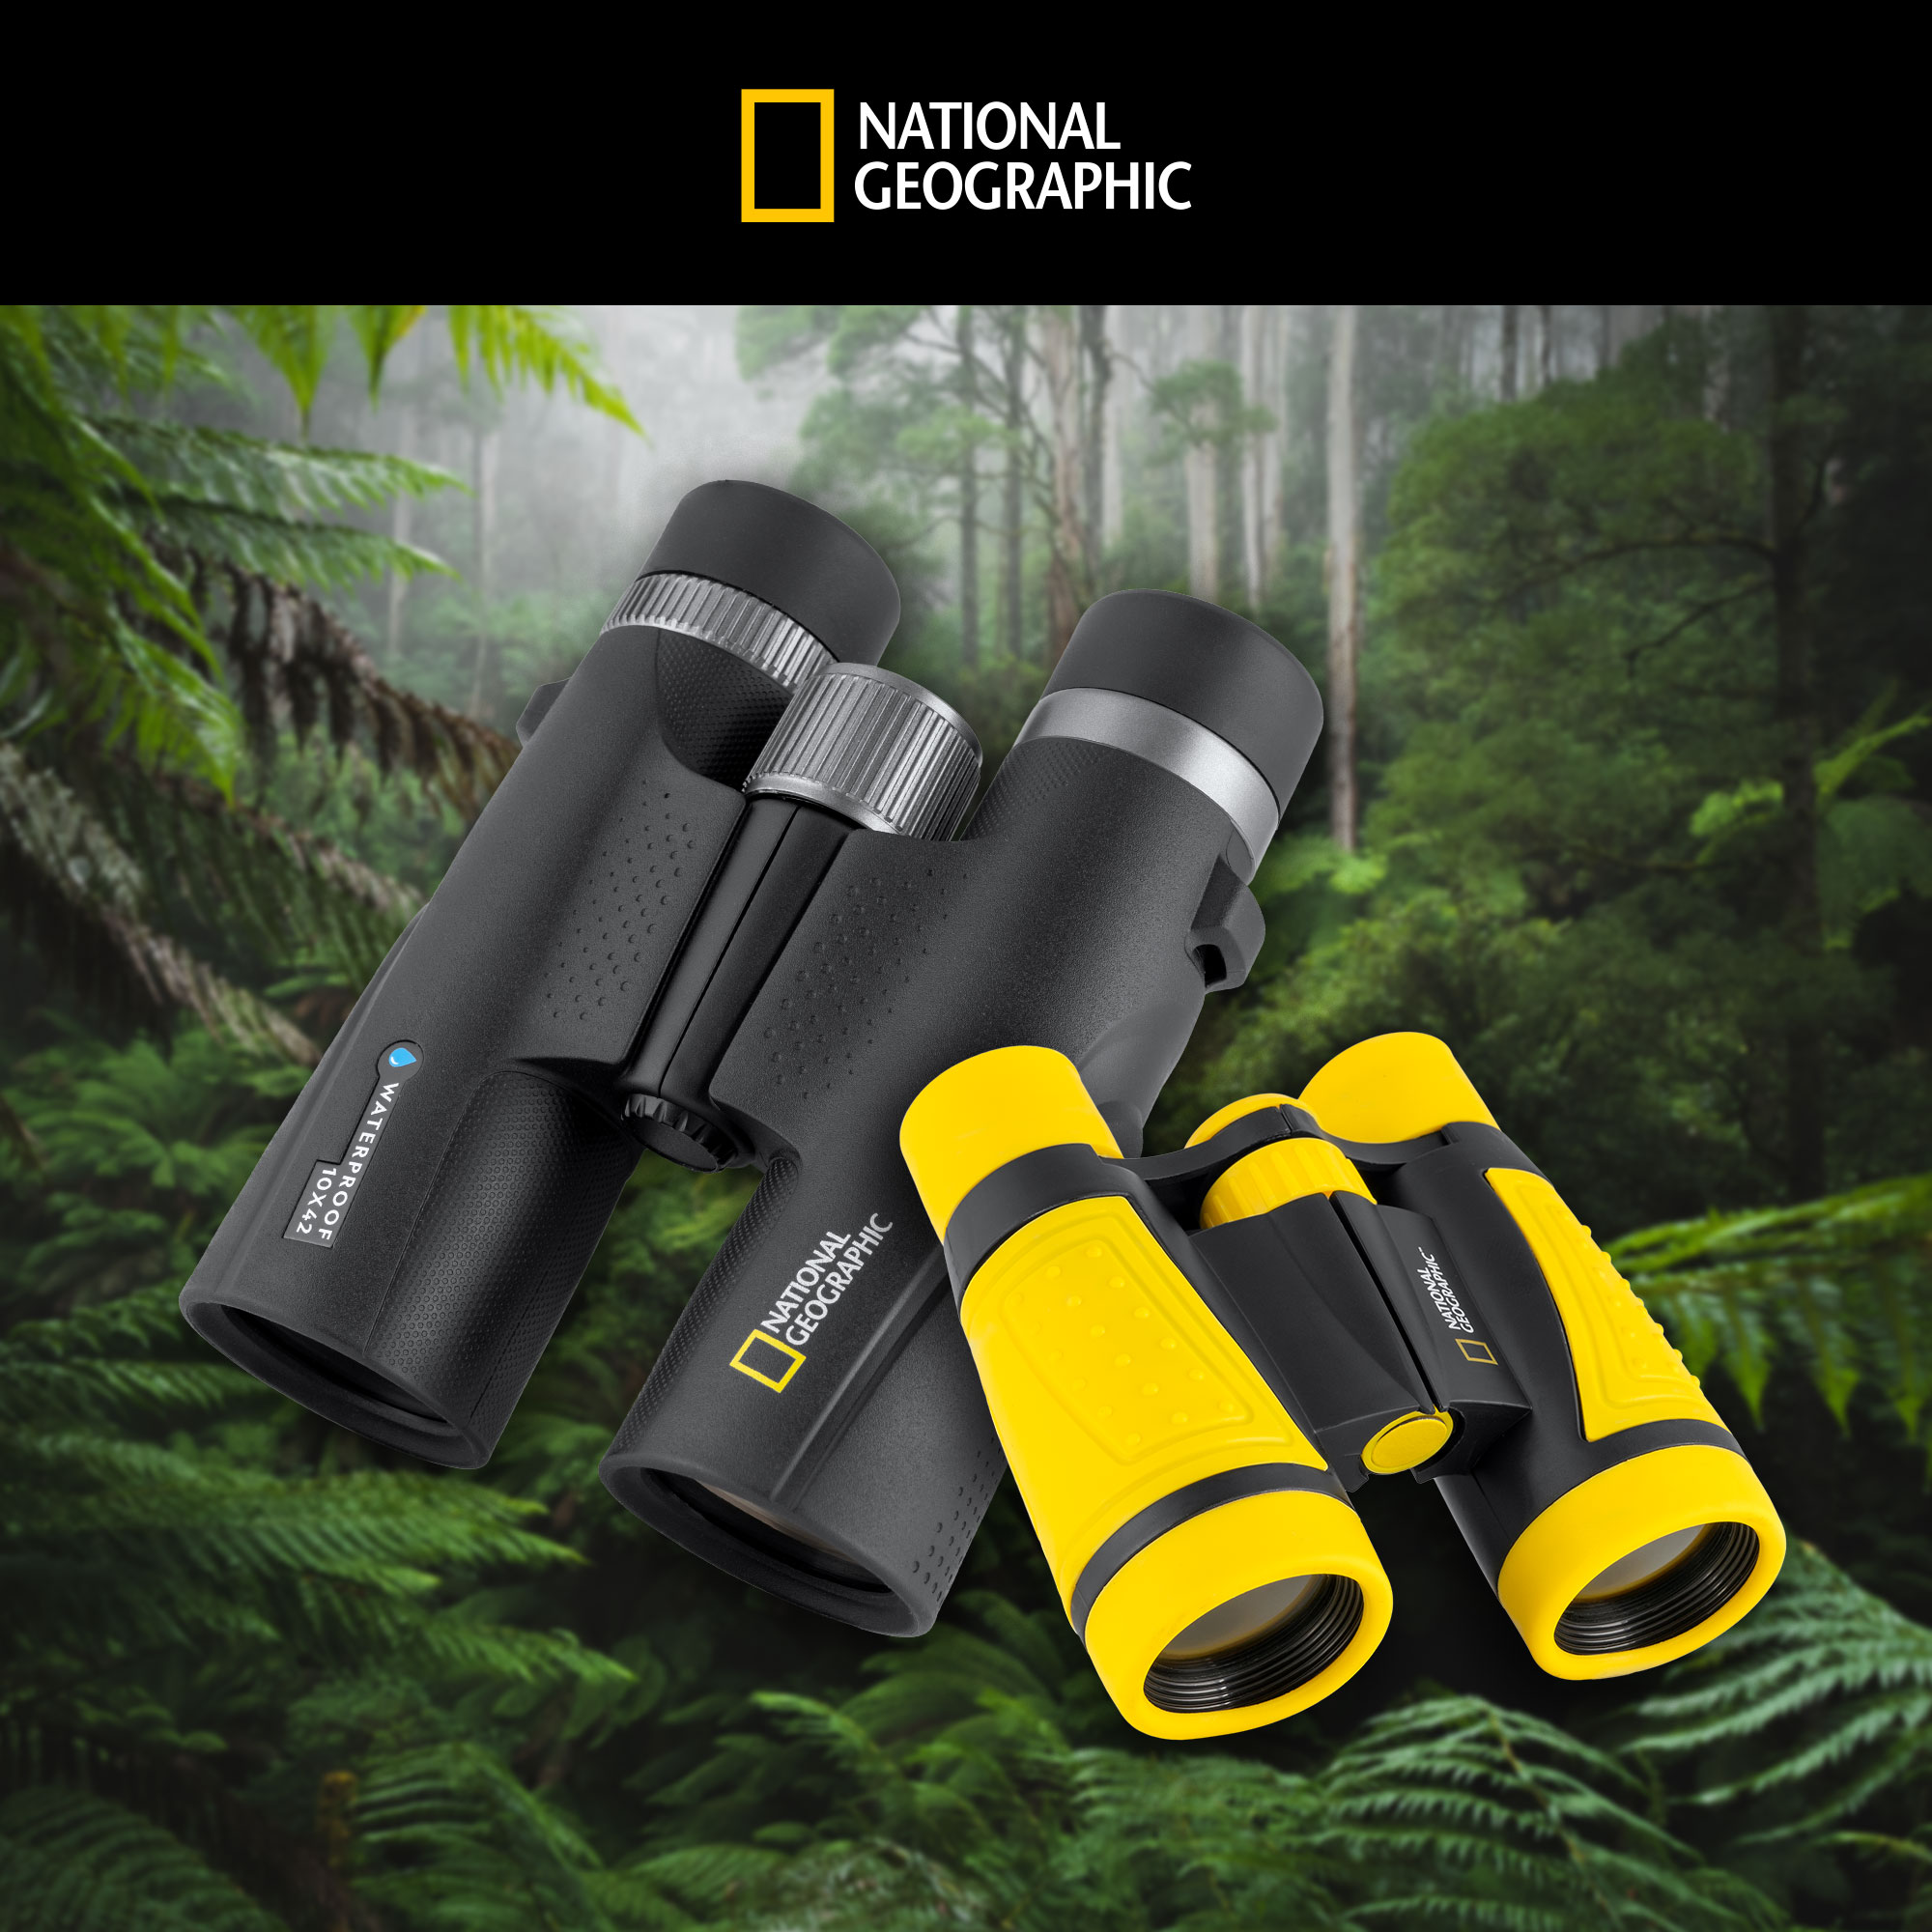 National Geographic binoculars